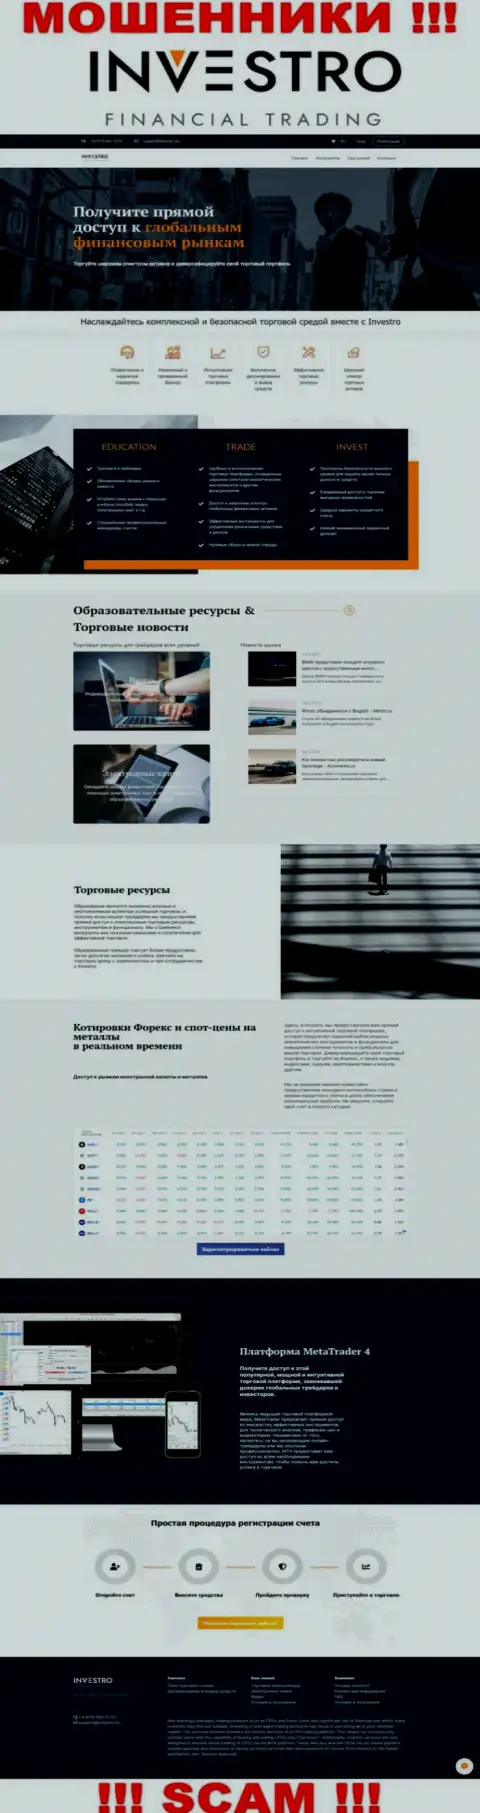 Скрин официального веб-ресурса Инвестро - Investro Fm